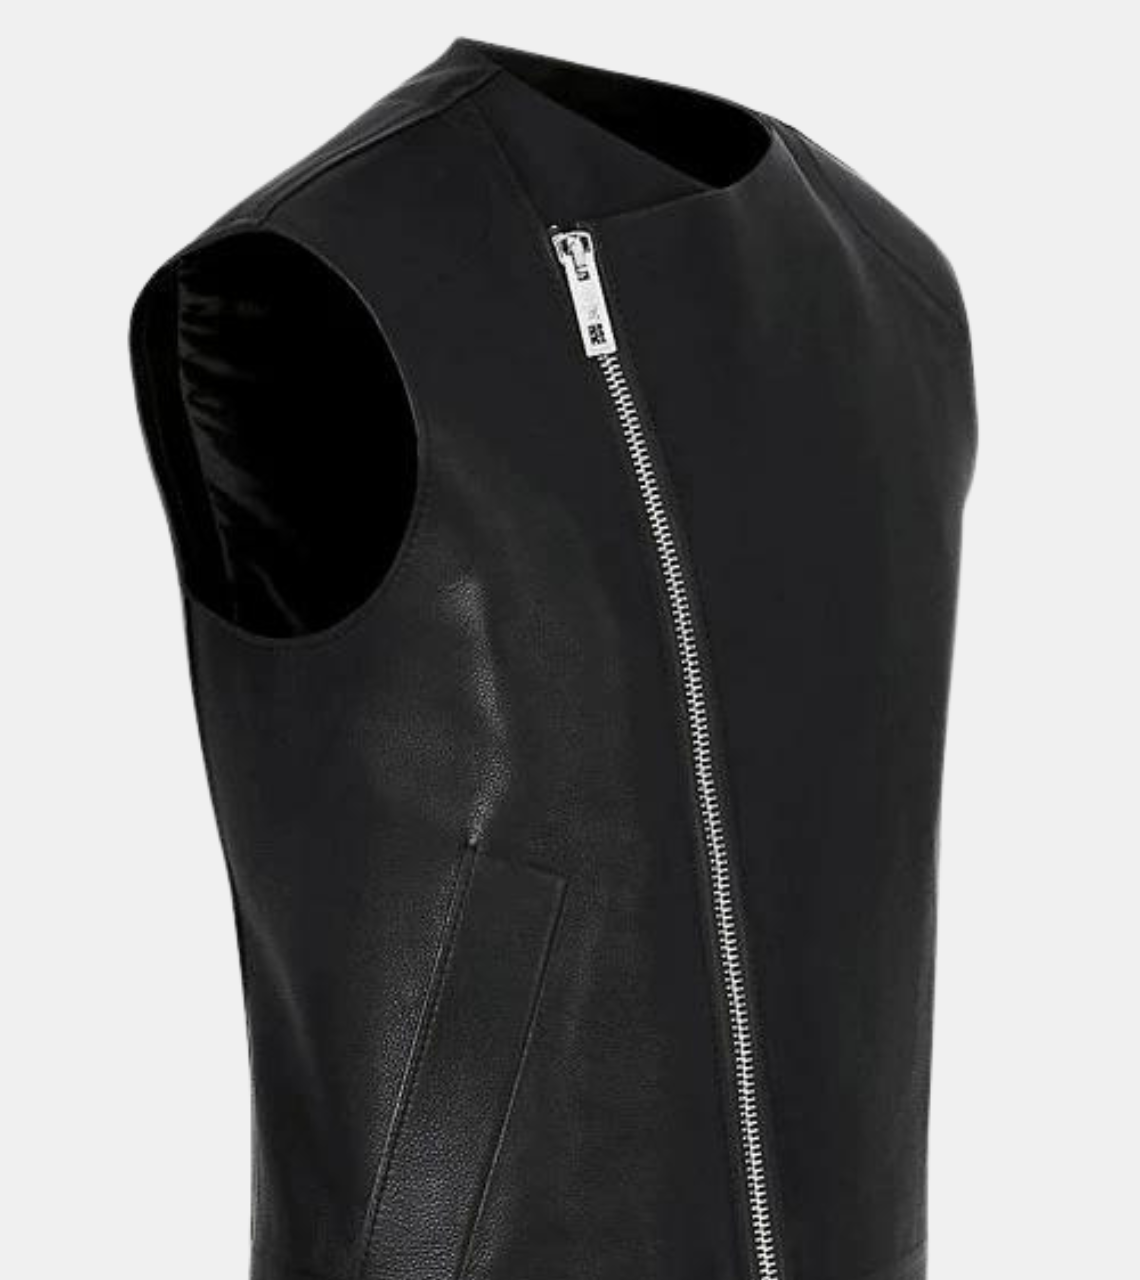  Men's Black Leather Vest